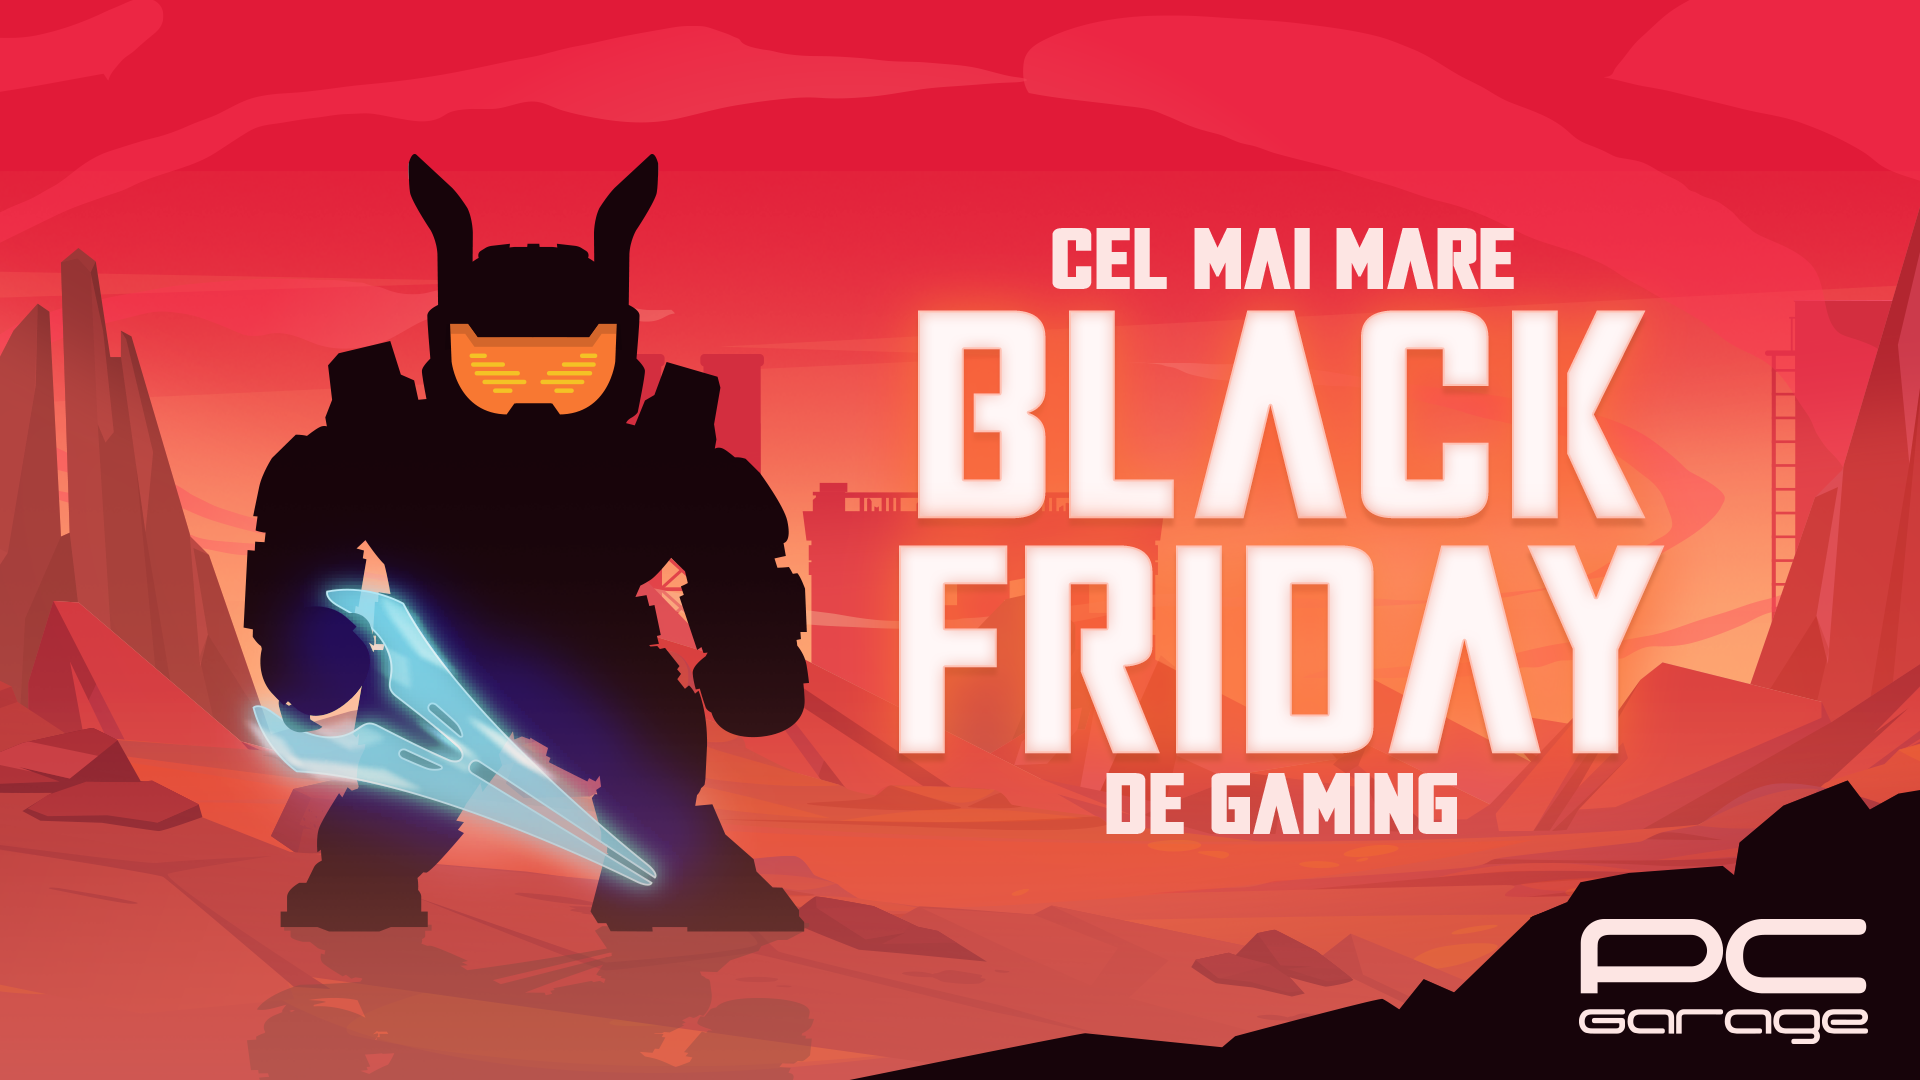 PC Garage anunță cel mai mare Black Friday de Gaming